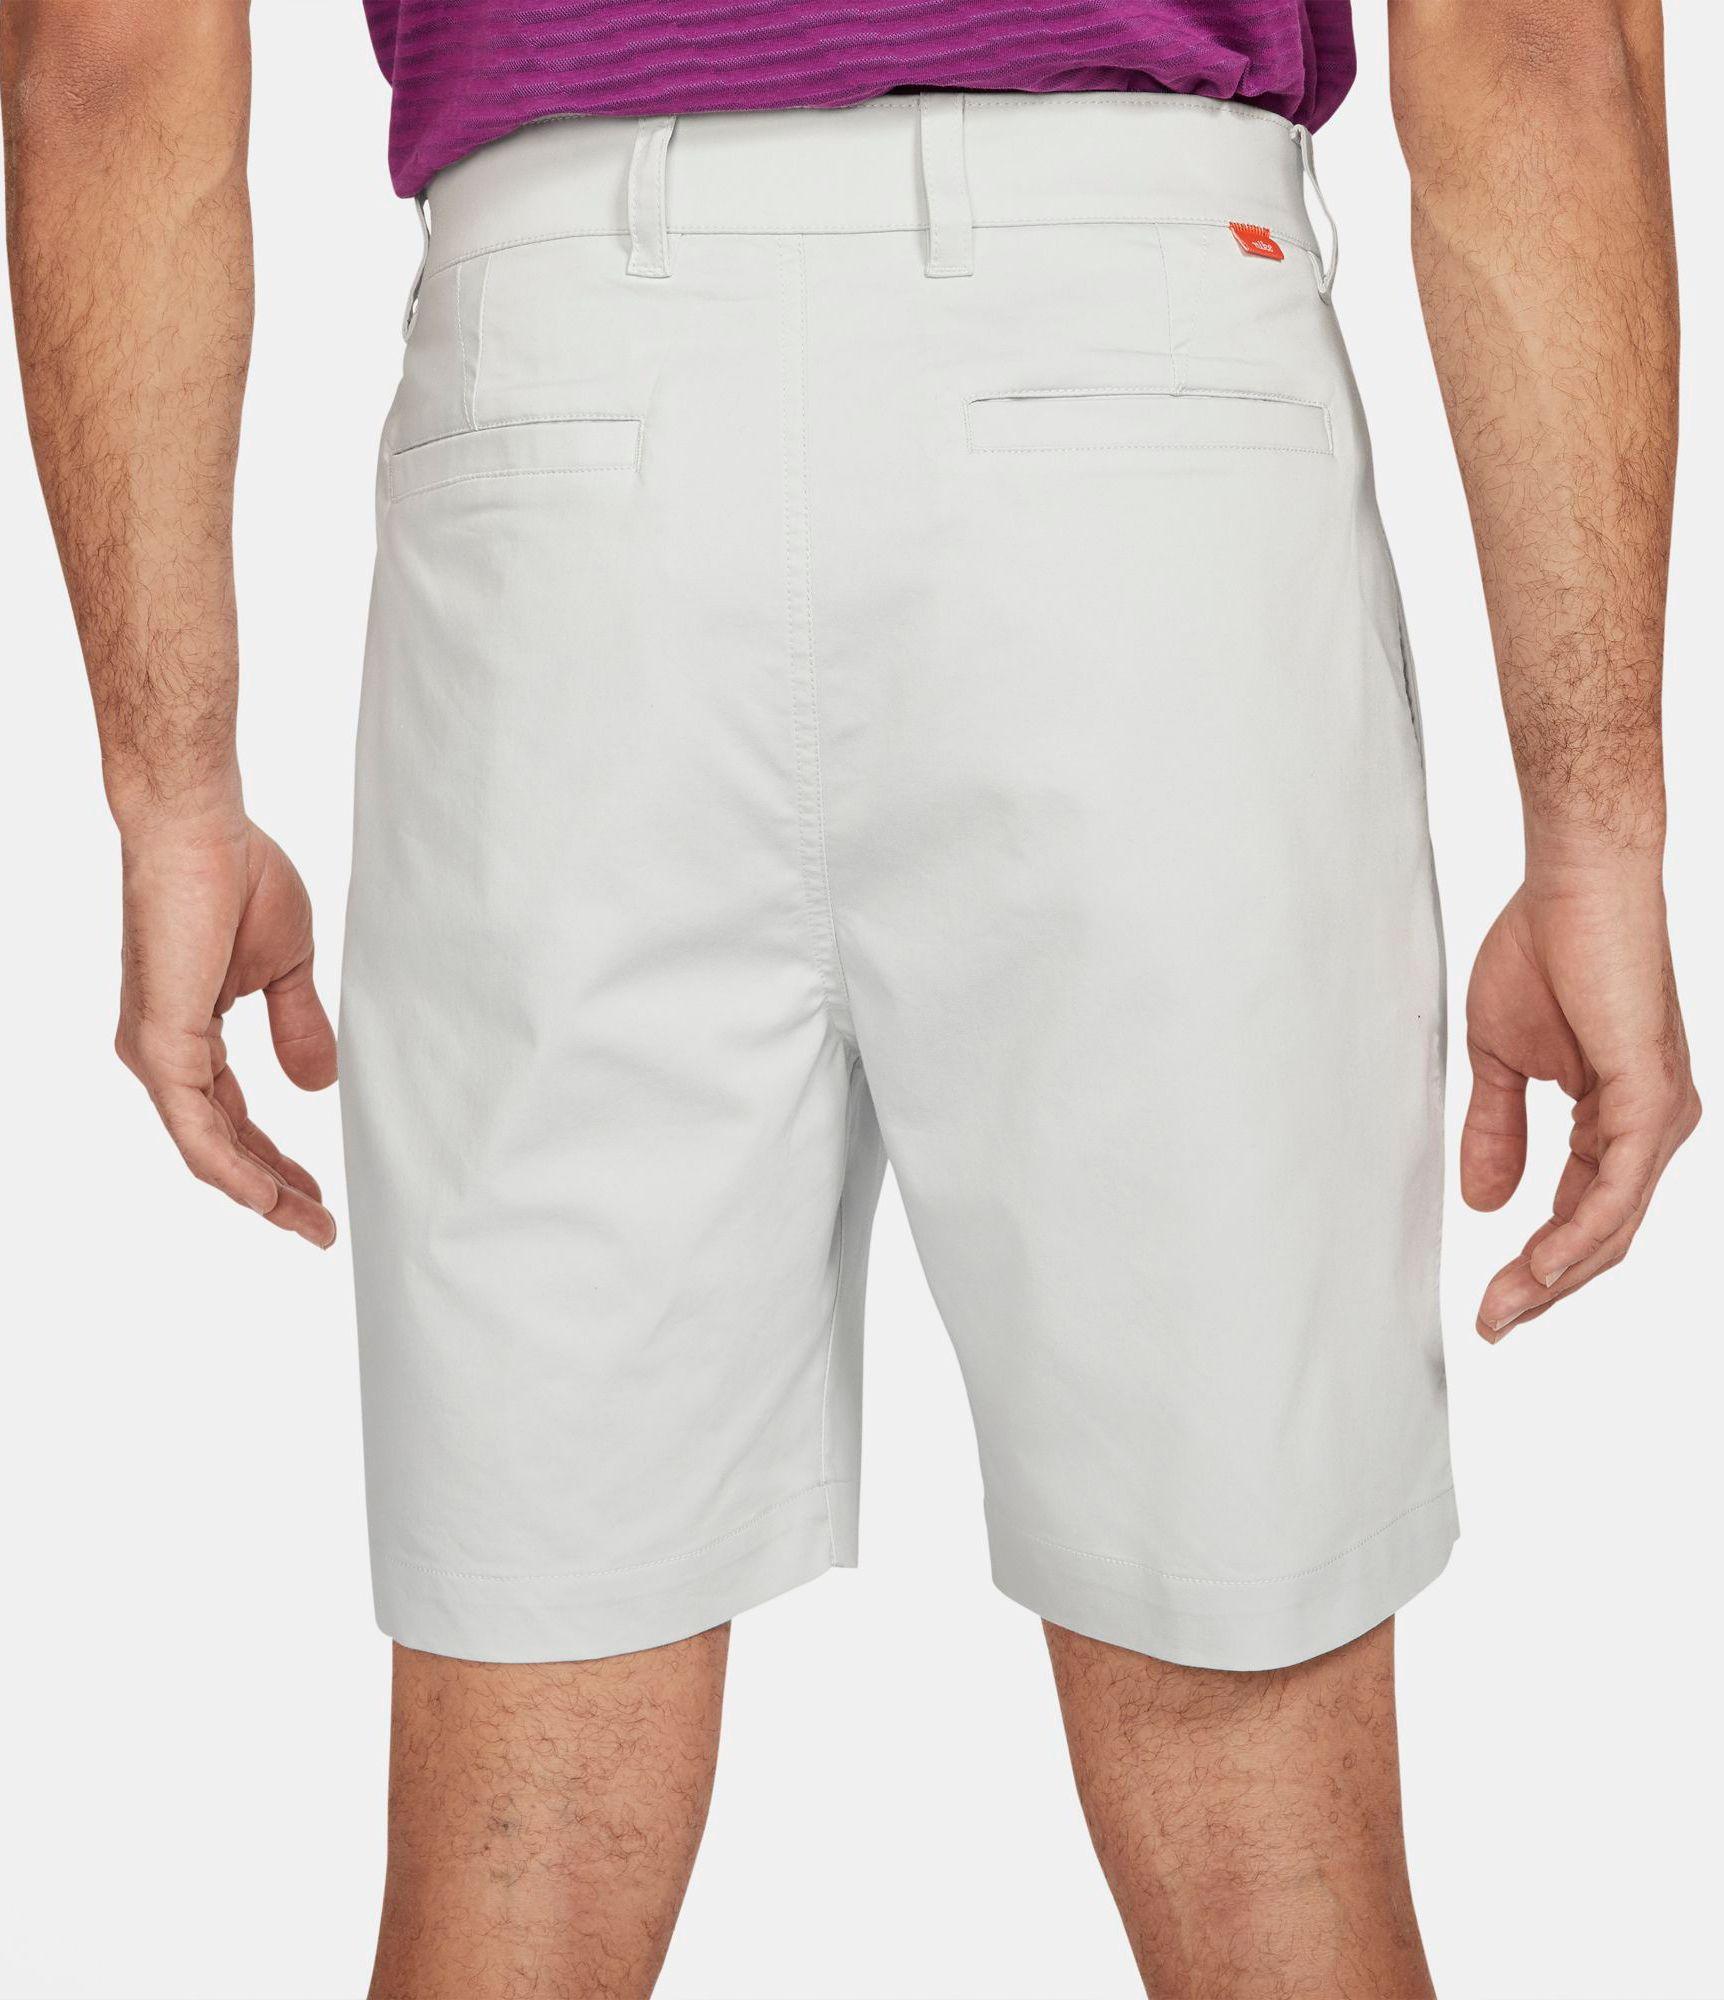 Nike Dri-fit Uv Chino Golf Shorts for Men - Lyst